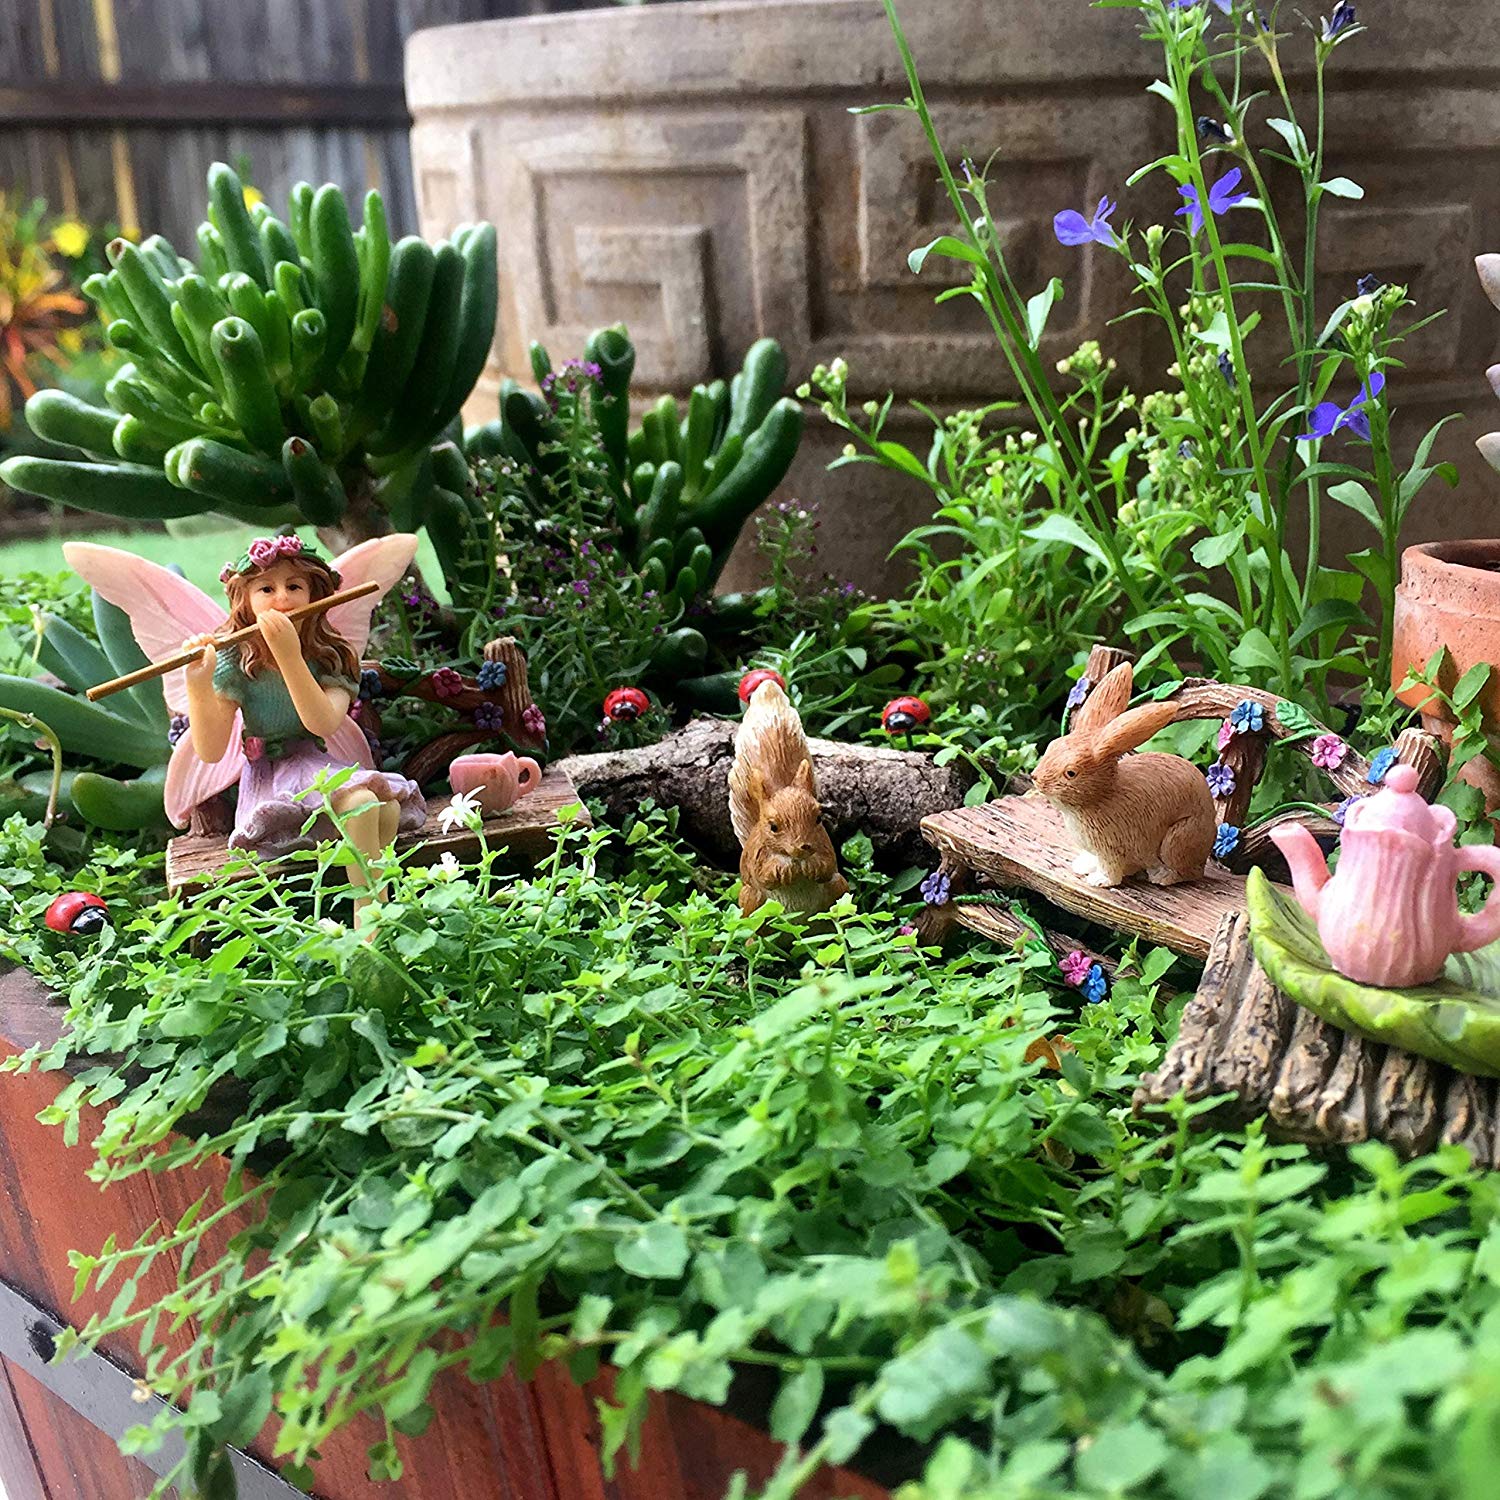 PRETMANNS Fairy Garden Fairy Accessories – Miniature Fairy